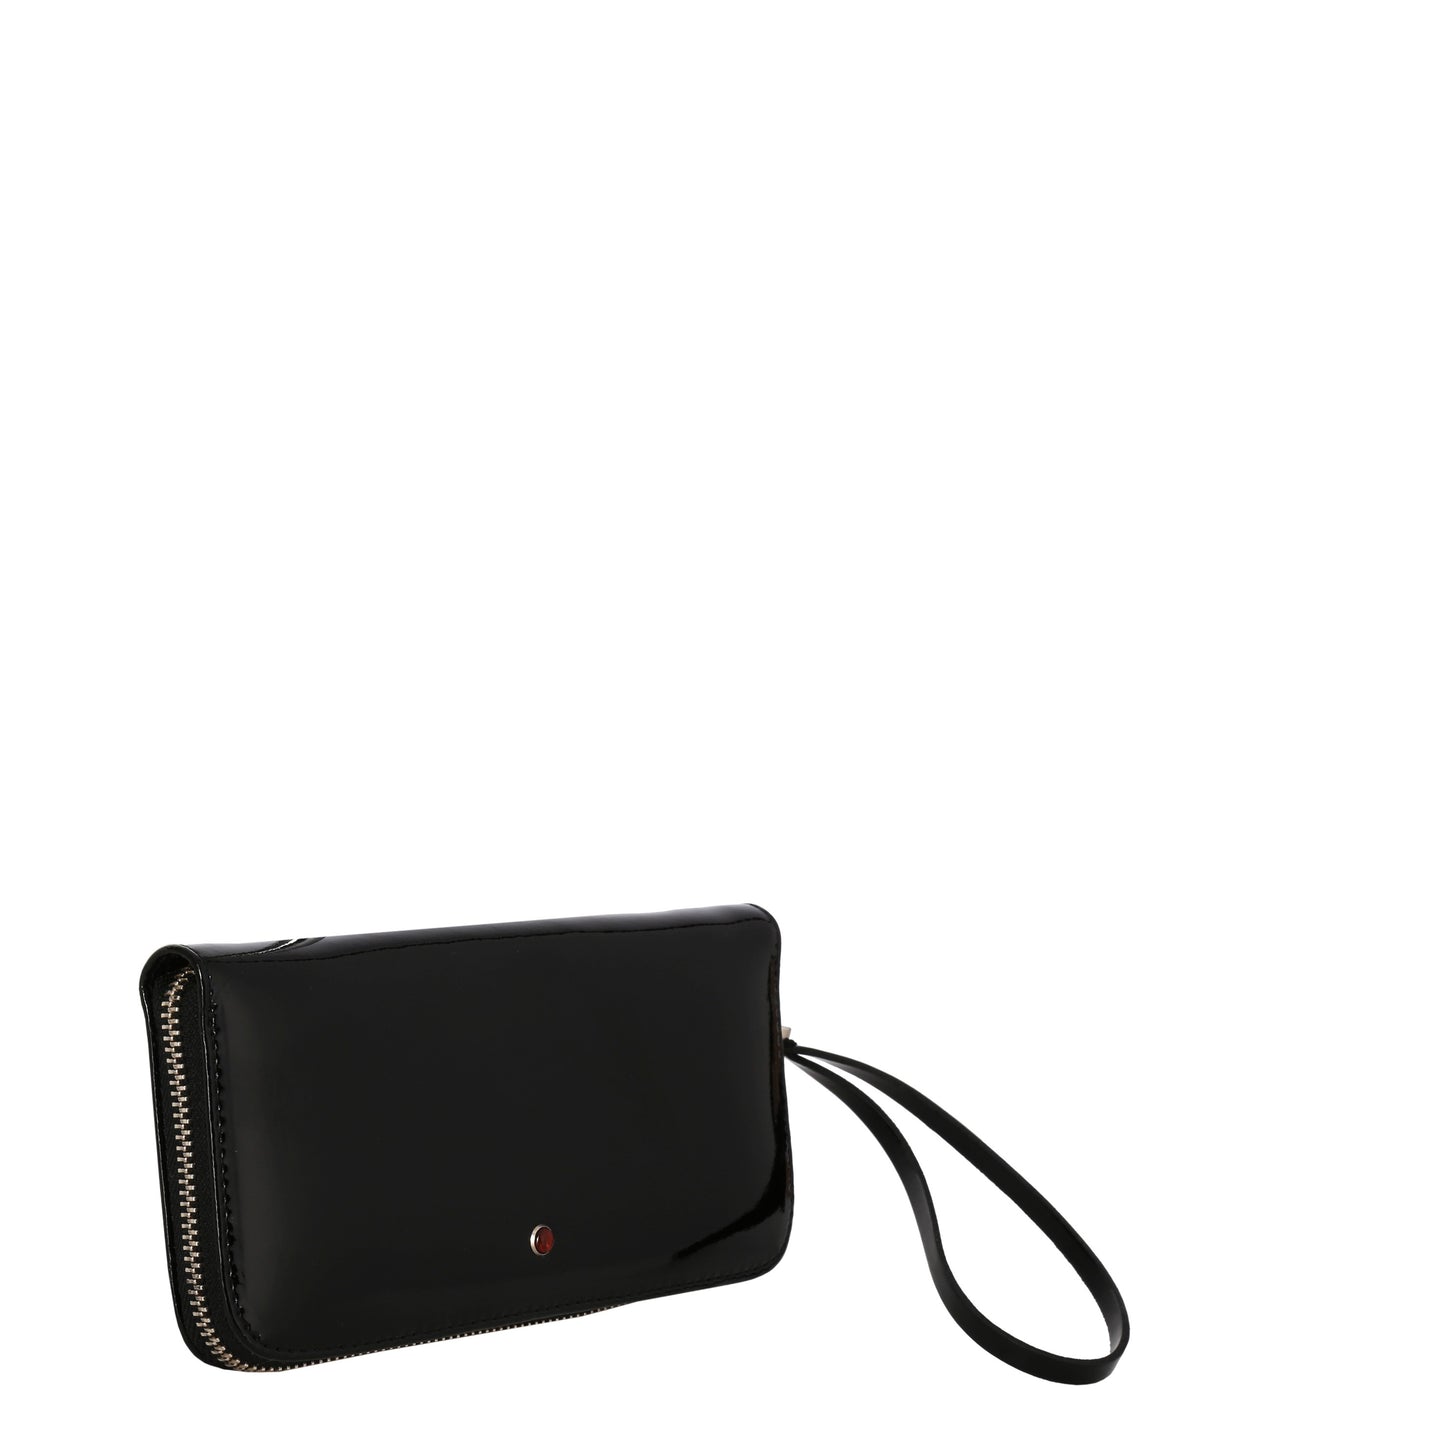 VERNICE BLACK women's leather wallet